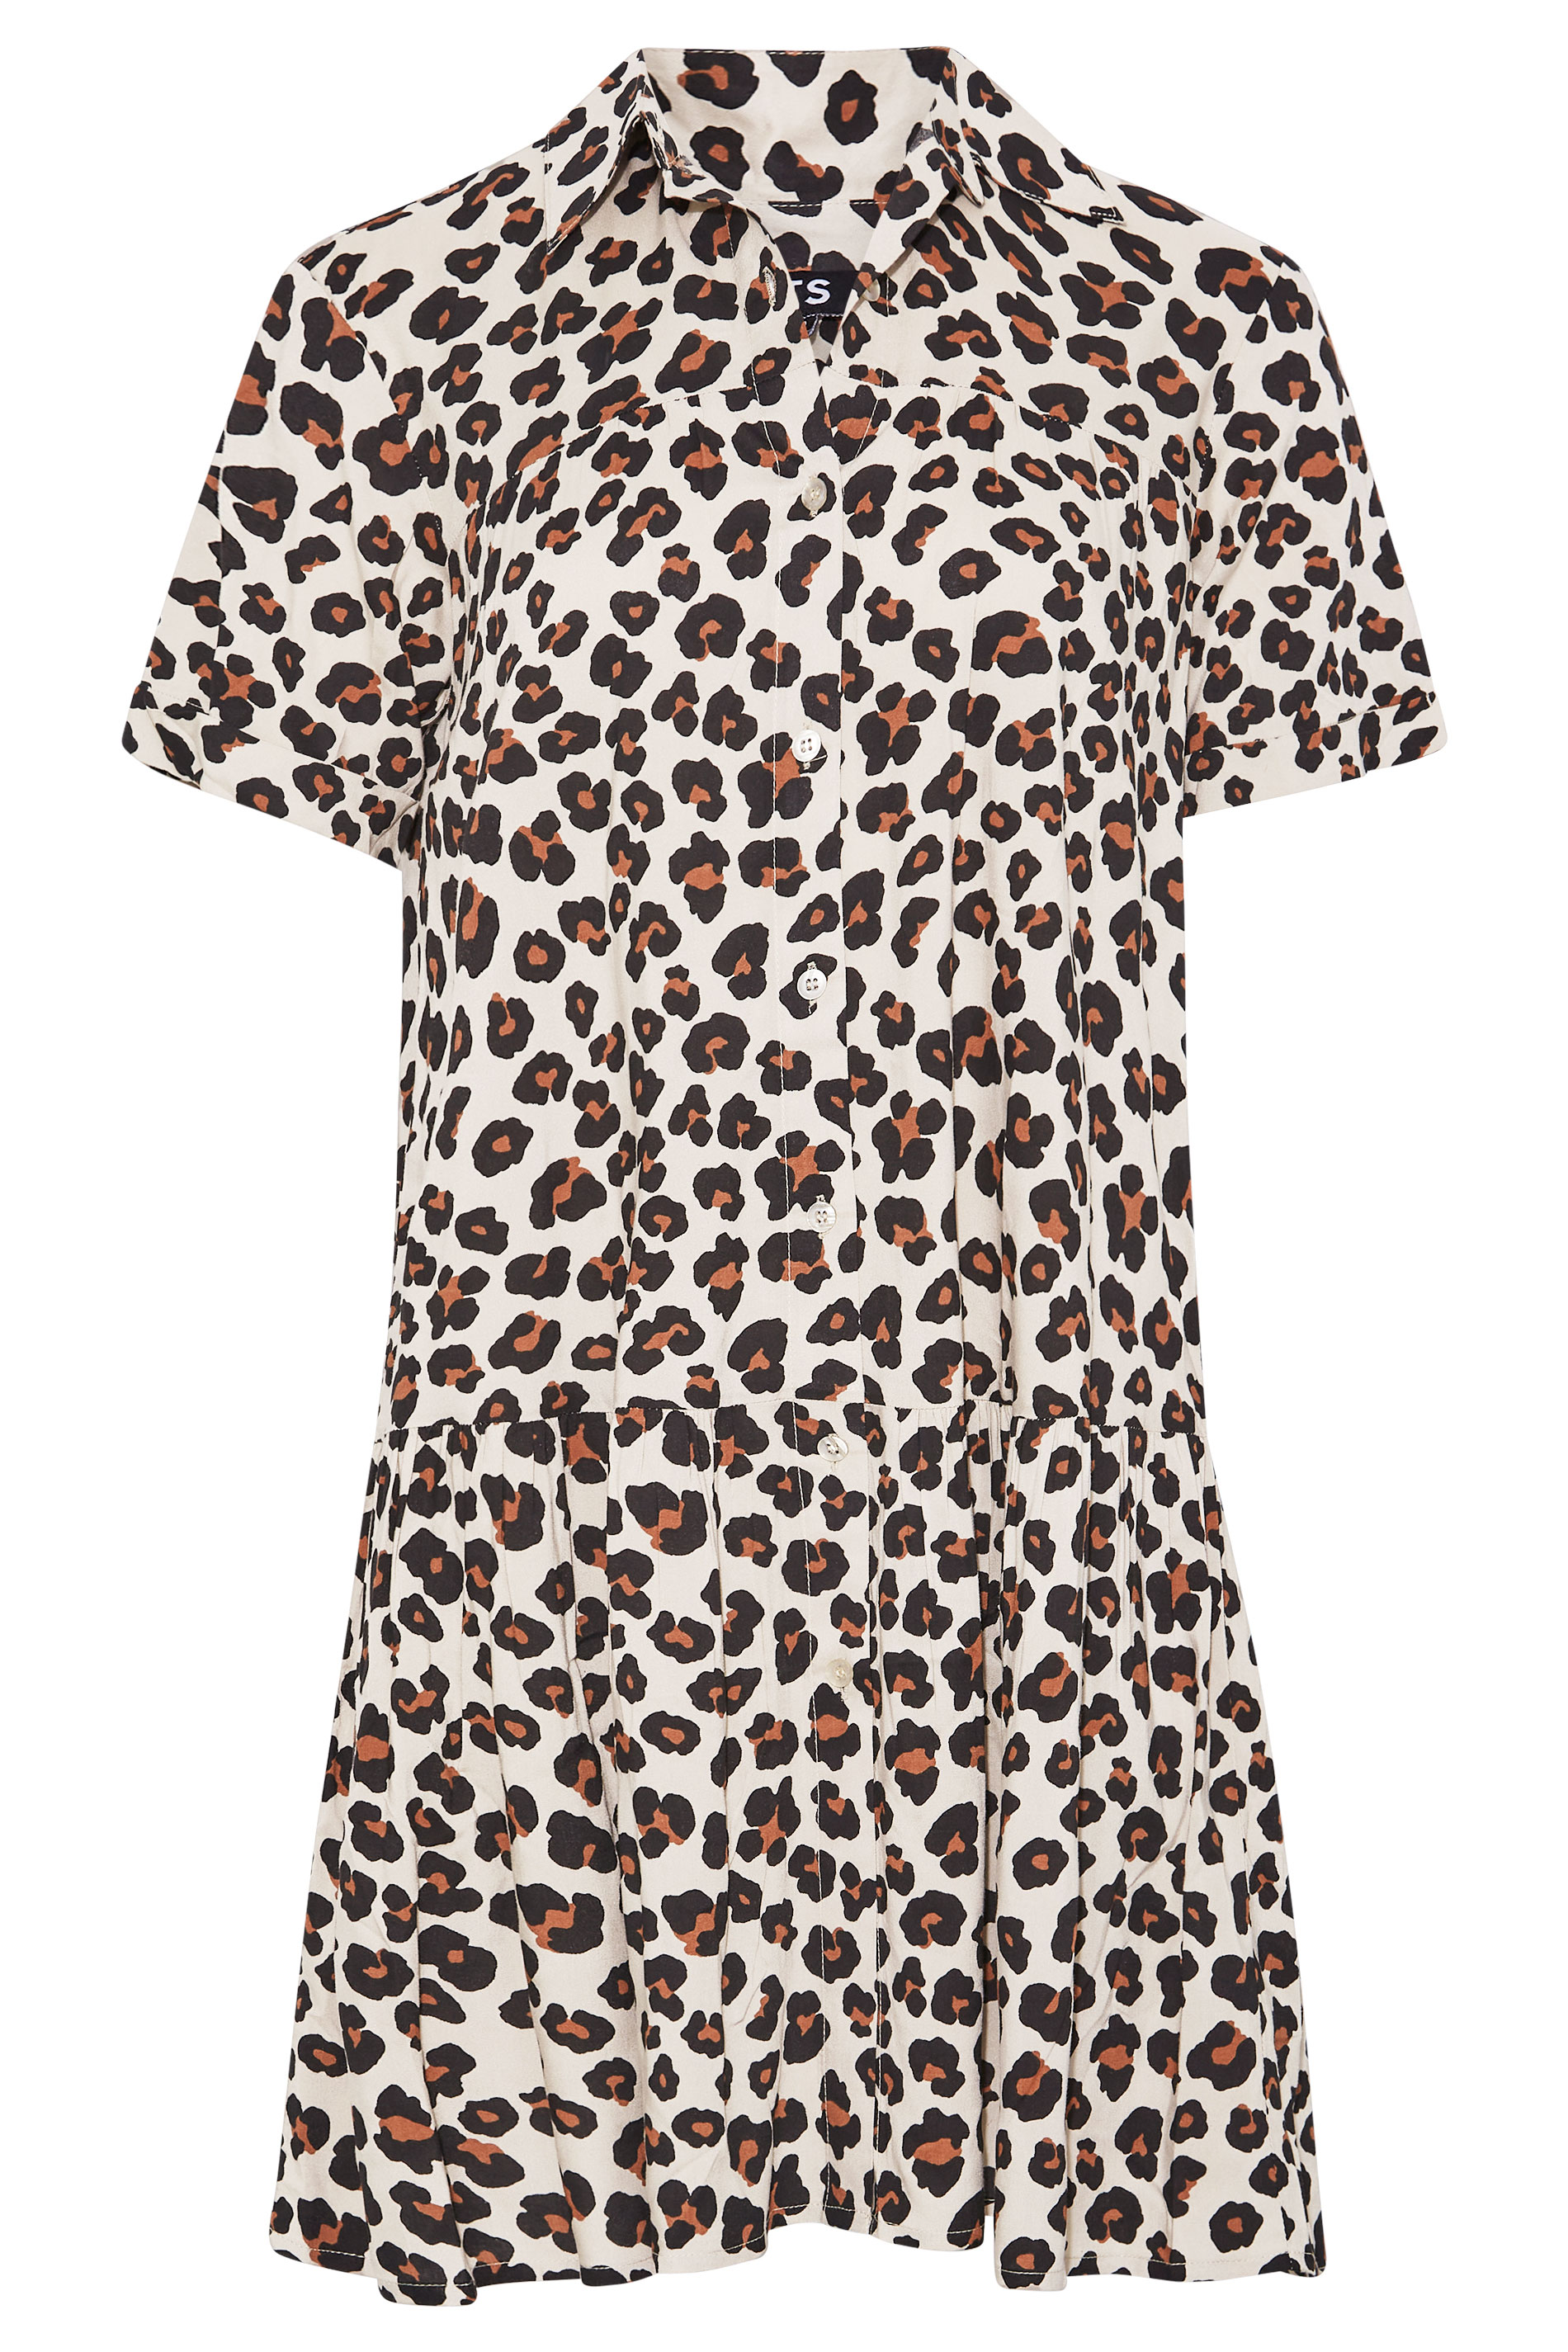 LTS Tall Women's Beige Brown Leopard Print Tiered Tunic Top | Long Tall ...